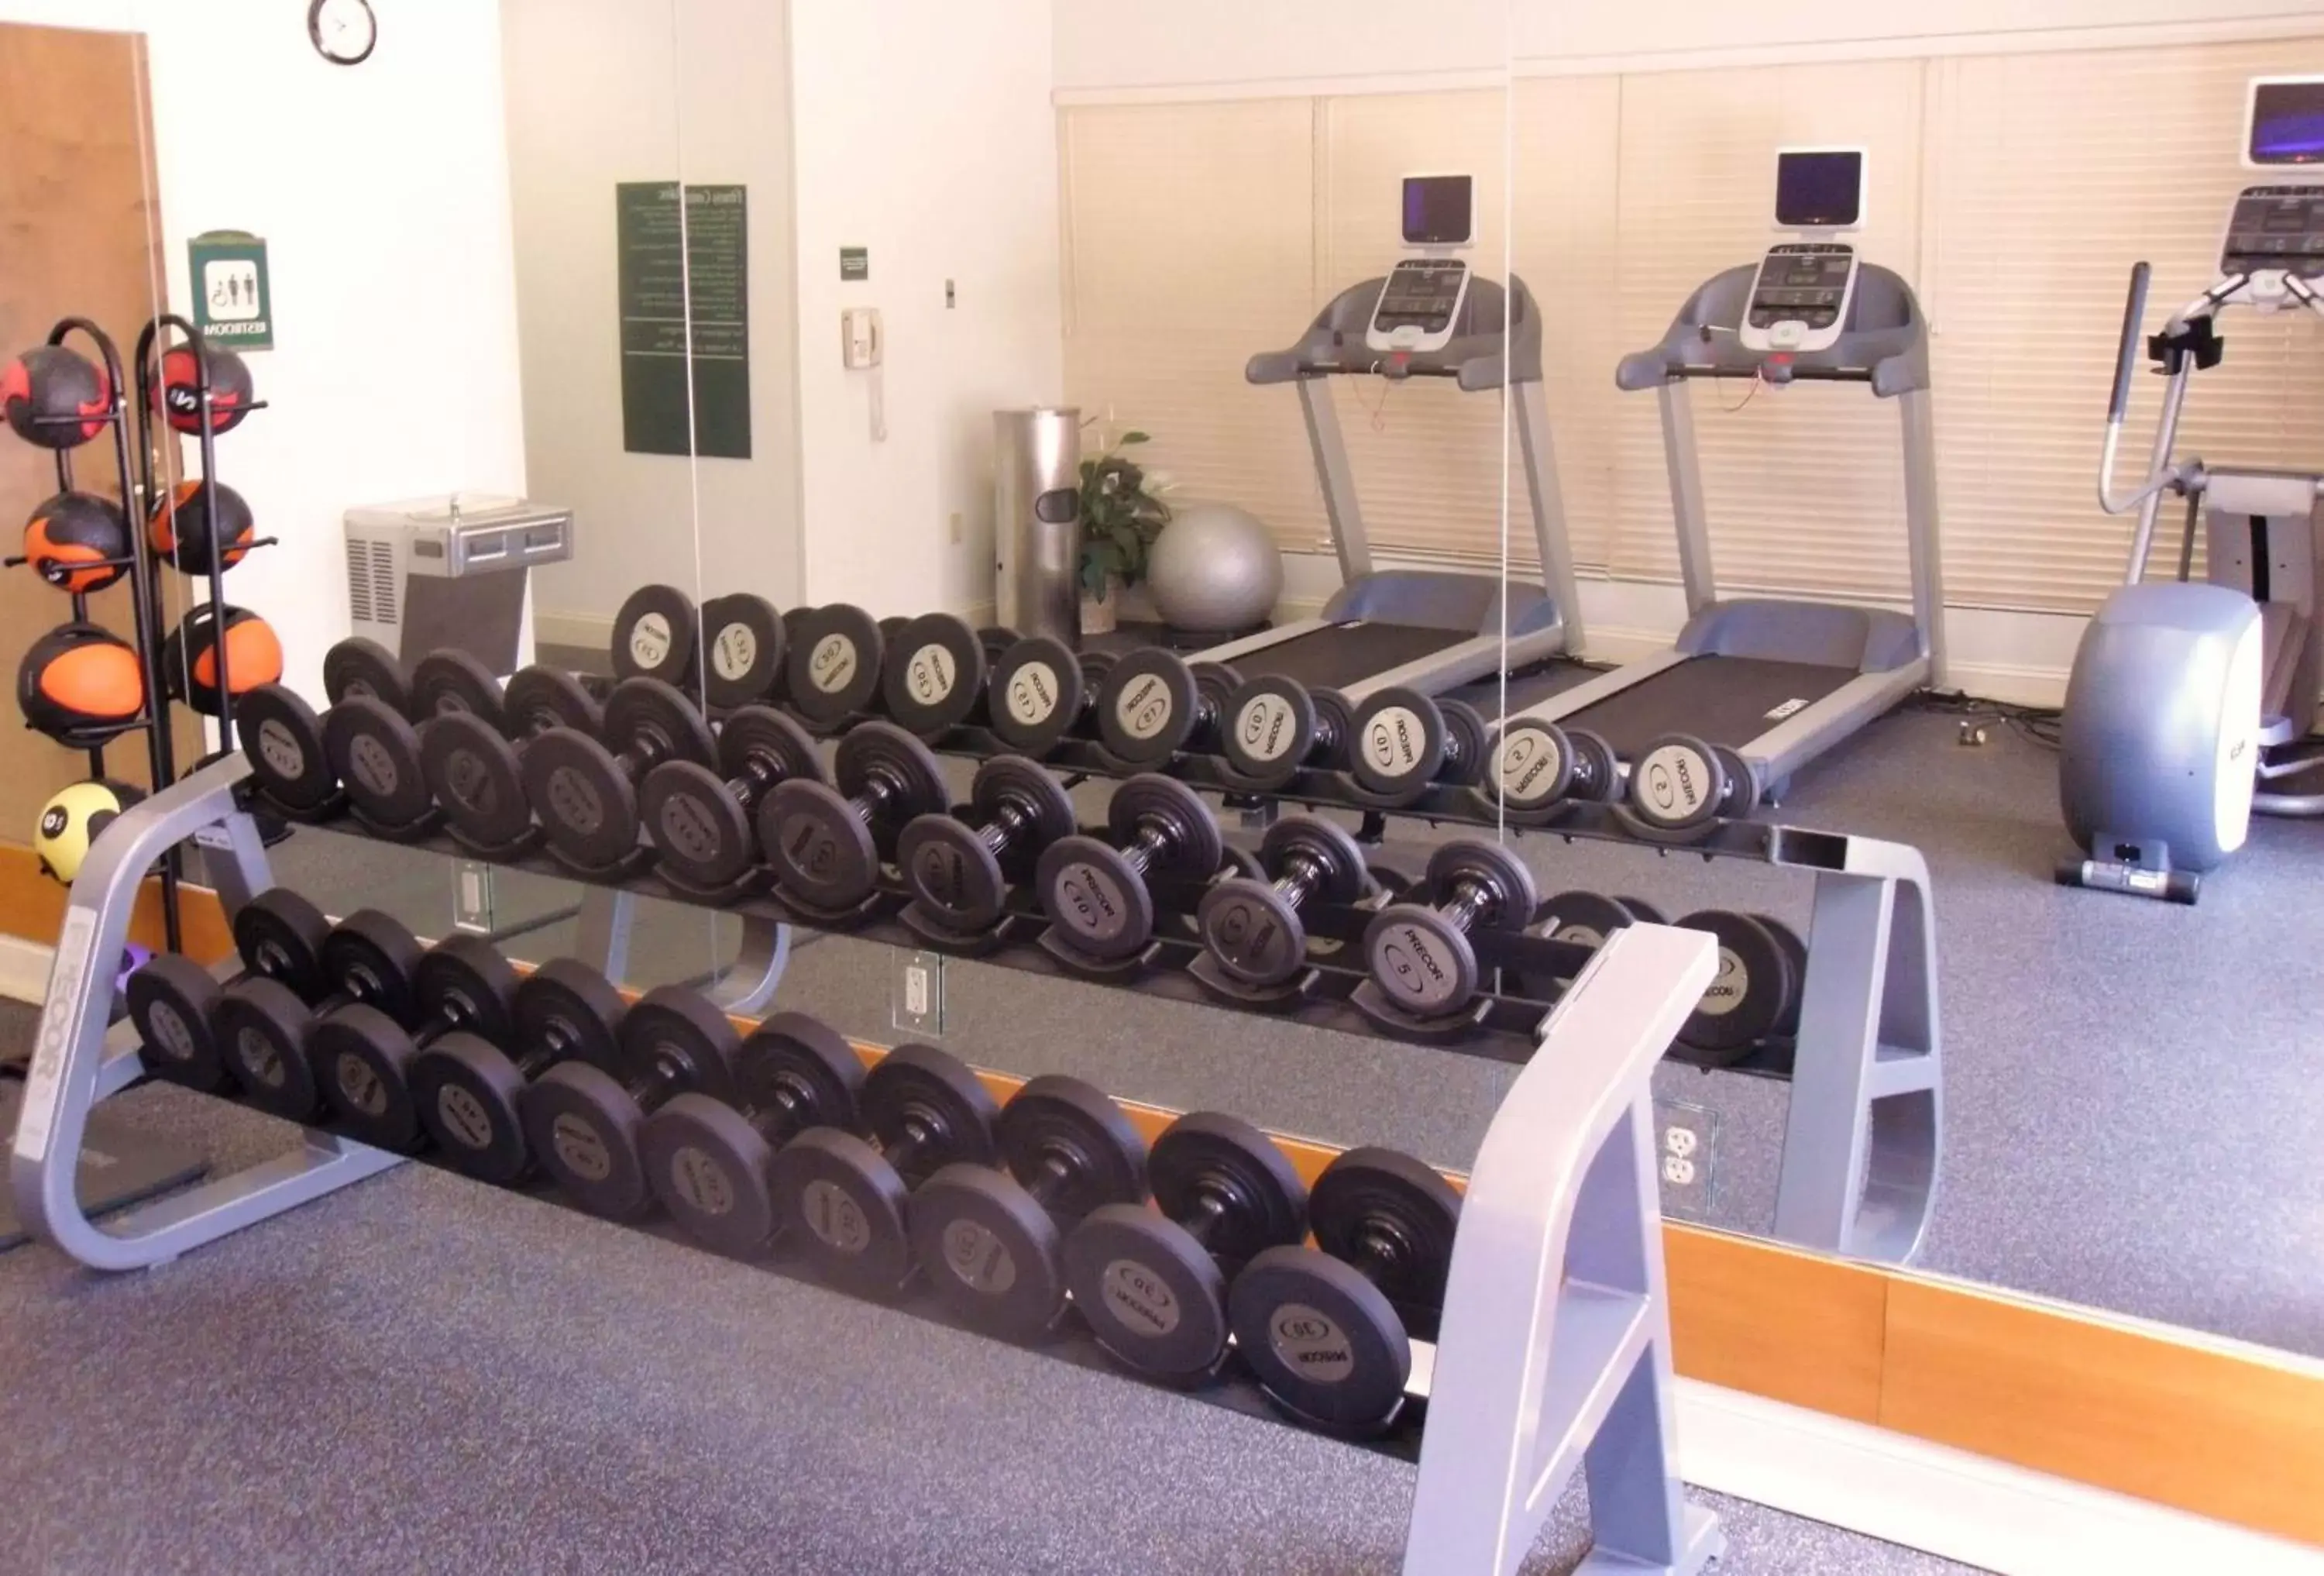 Fitness centre/facilities, Fitness Center/Facilities in Hilton Garden Inn Jacksonville Airport